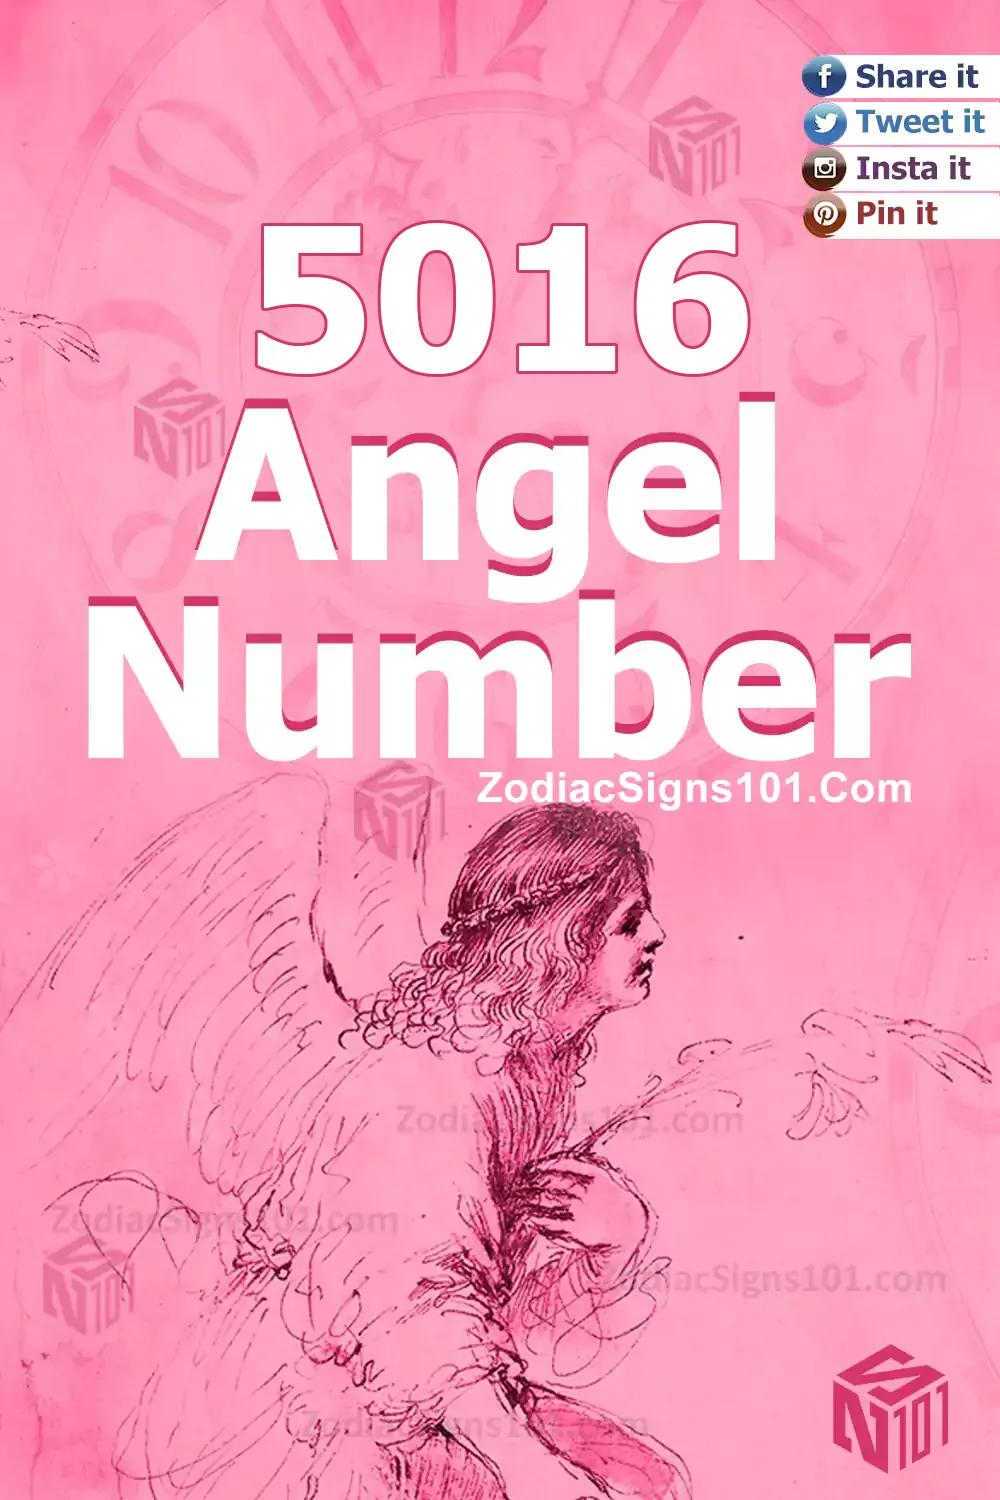 5016-Angel-Number-Meaning.jpg